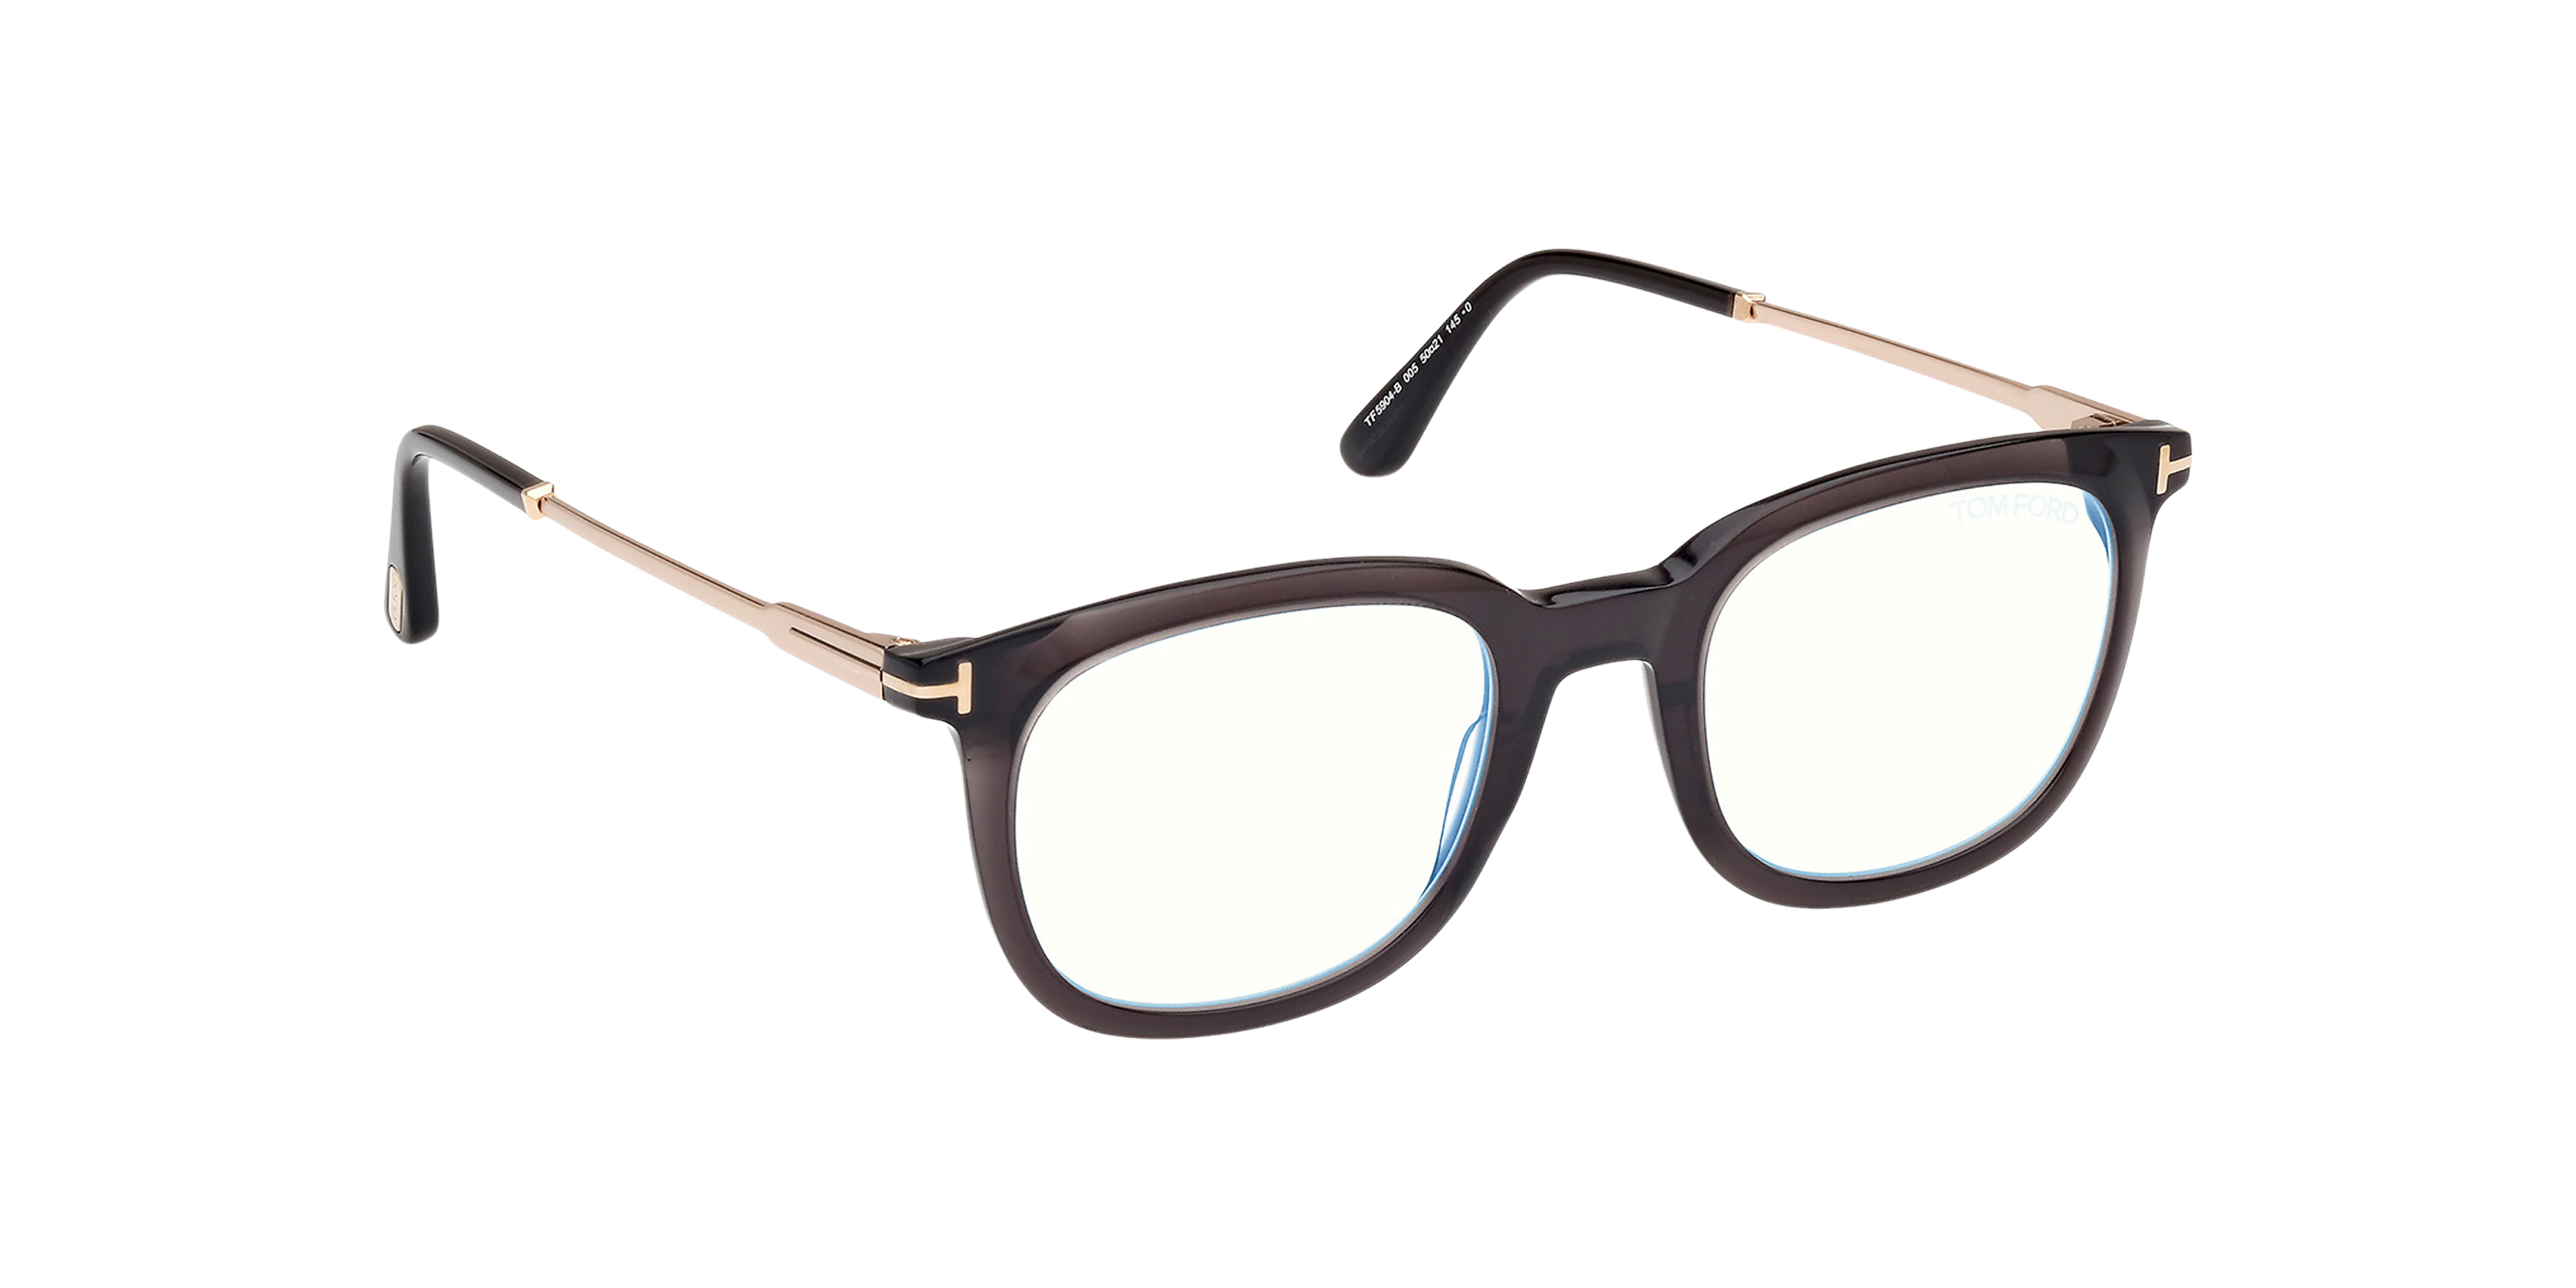 Angle_Right01 Tom Ford FT 5904-B Glasses Transparent / Transparent, Black